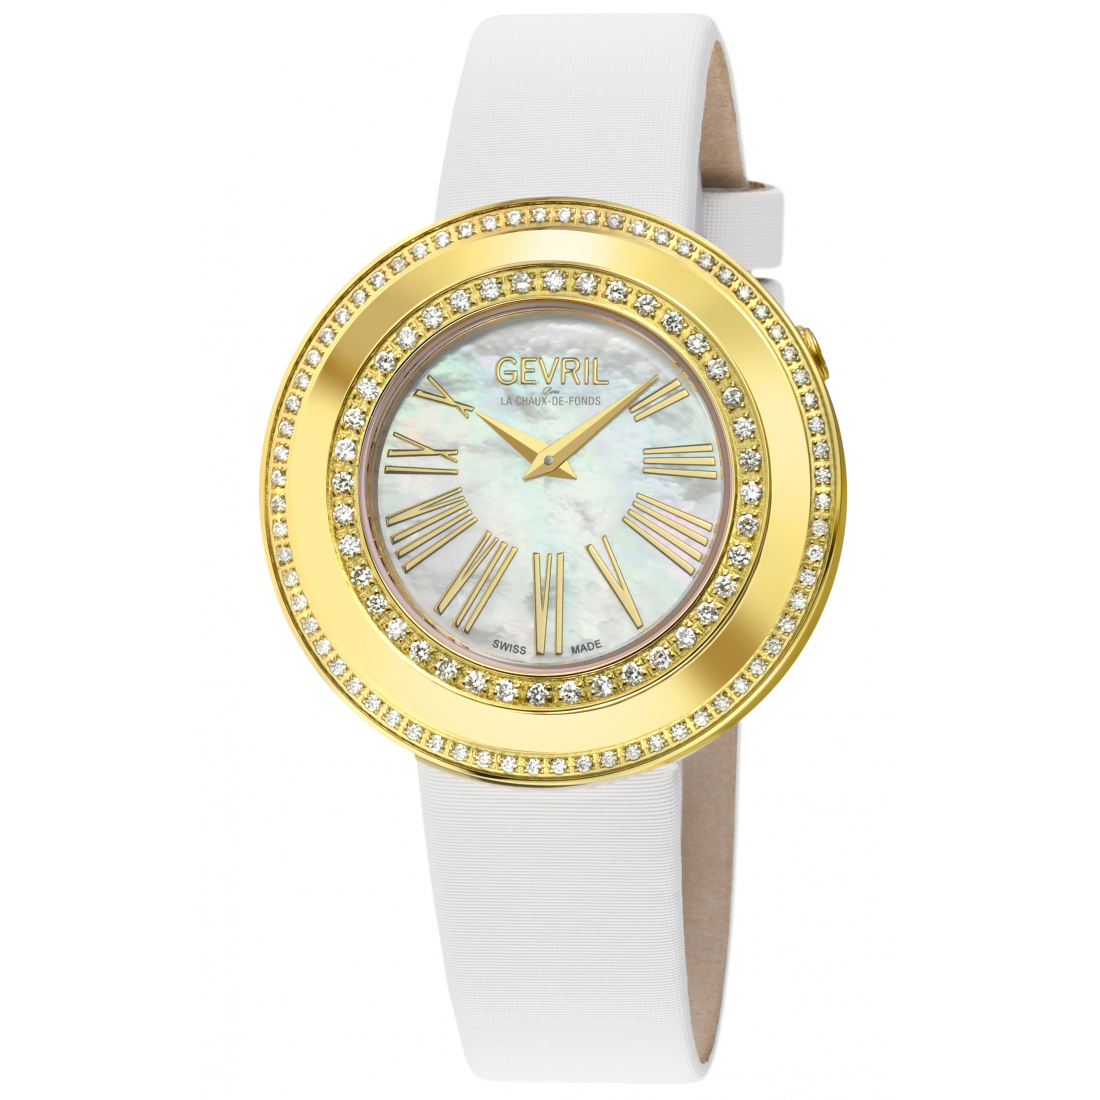 Women's Gandria Swiss Diamond Watch, 316L SS/IPYG Case, White MOP Dial, Genuine Italian Made Leather Strap